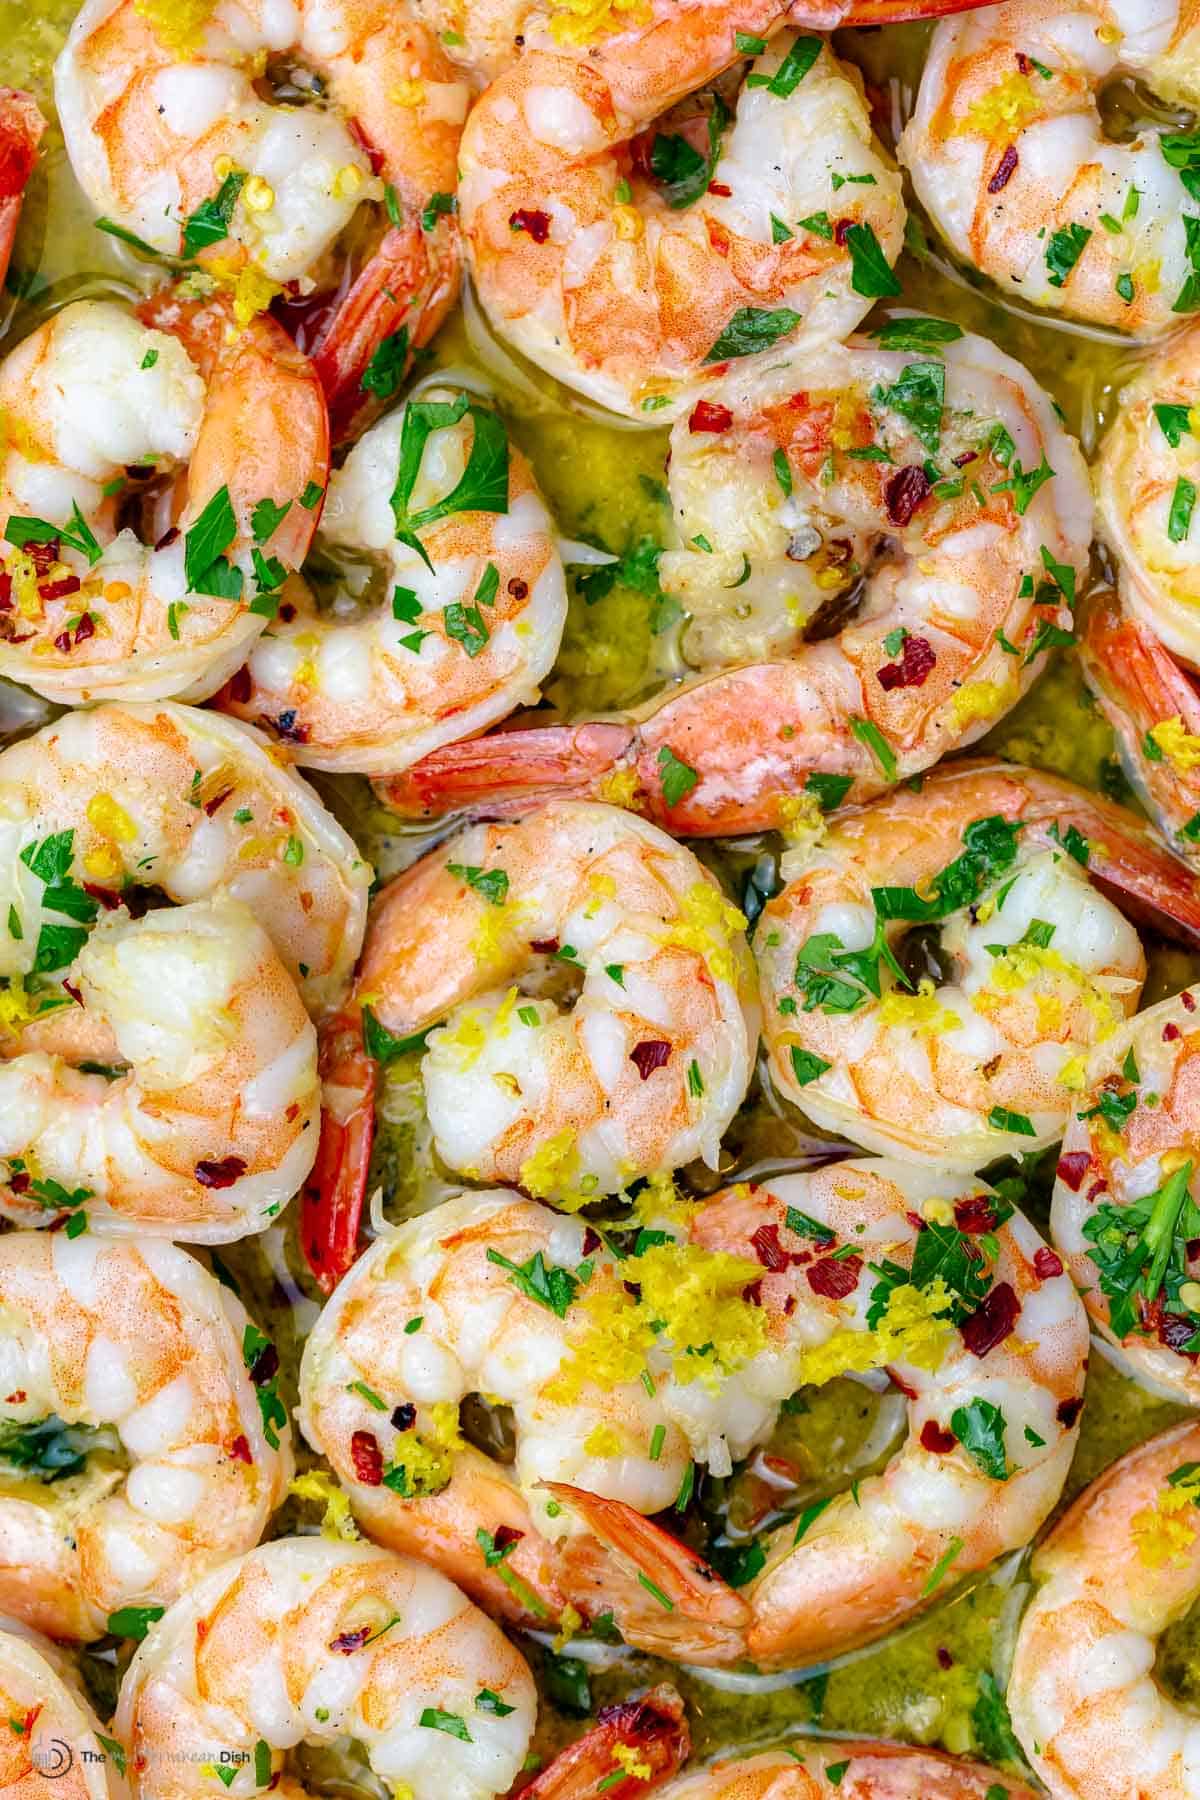 https://www.themediterraneandish.com/wp-content/uploads/2021/08/shrimp-scampi-recipe-4.jpg